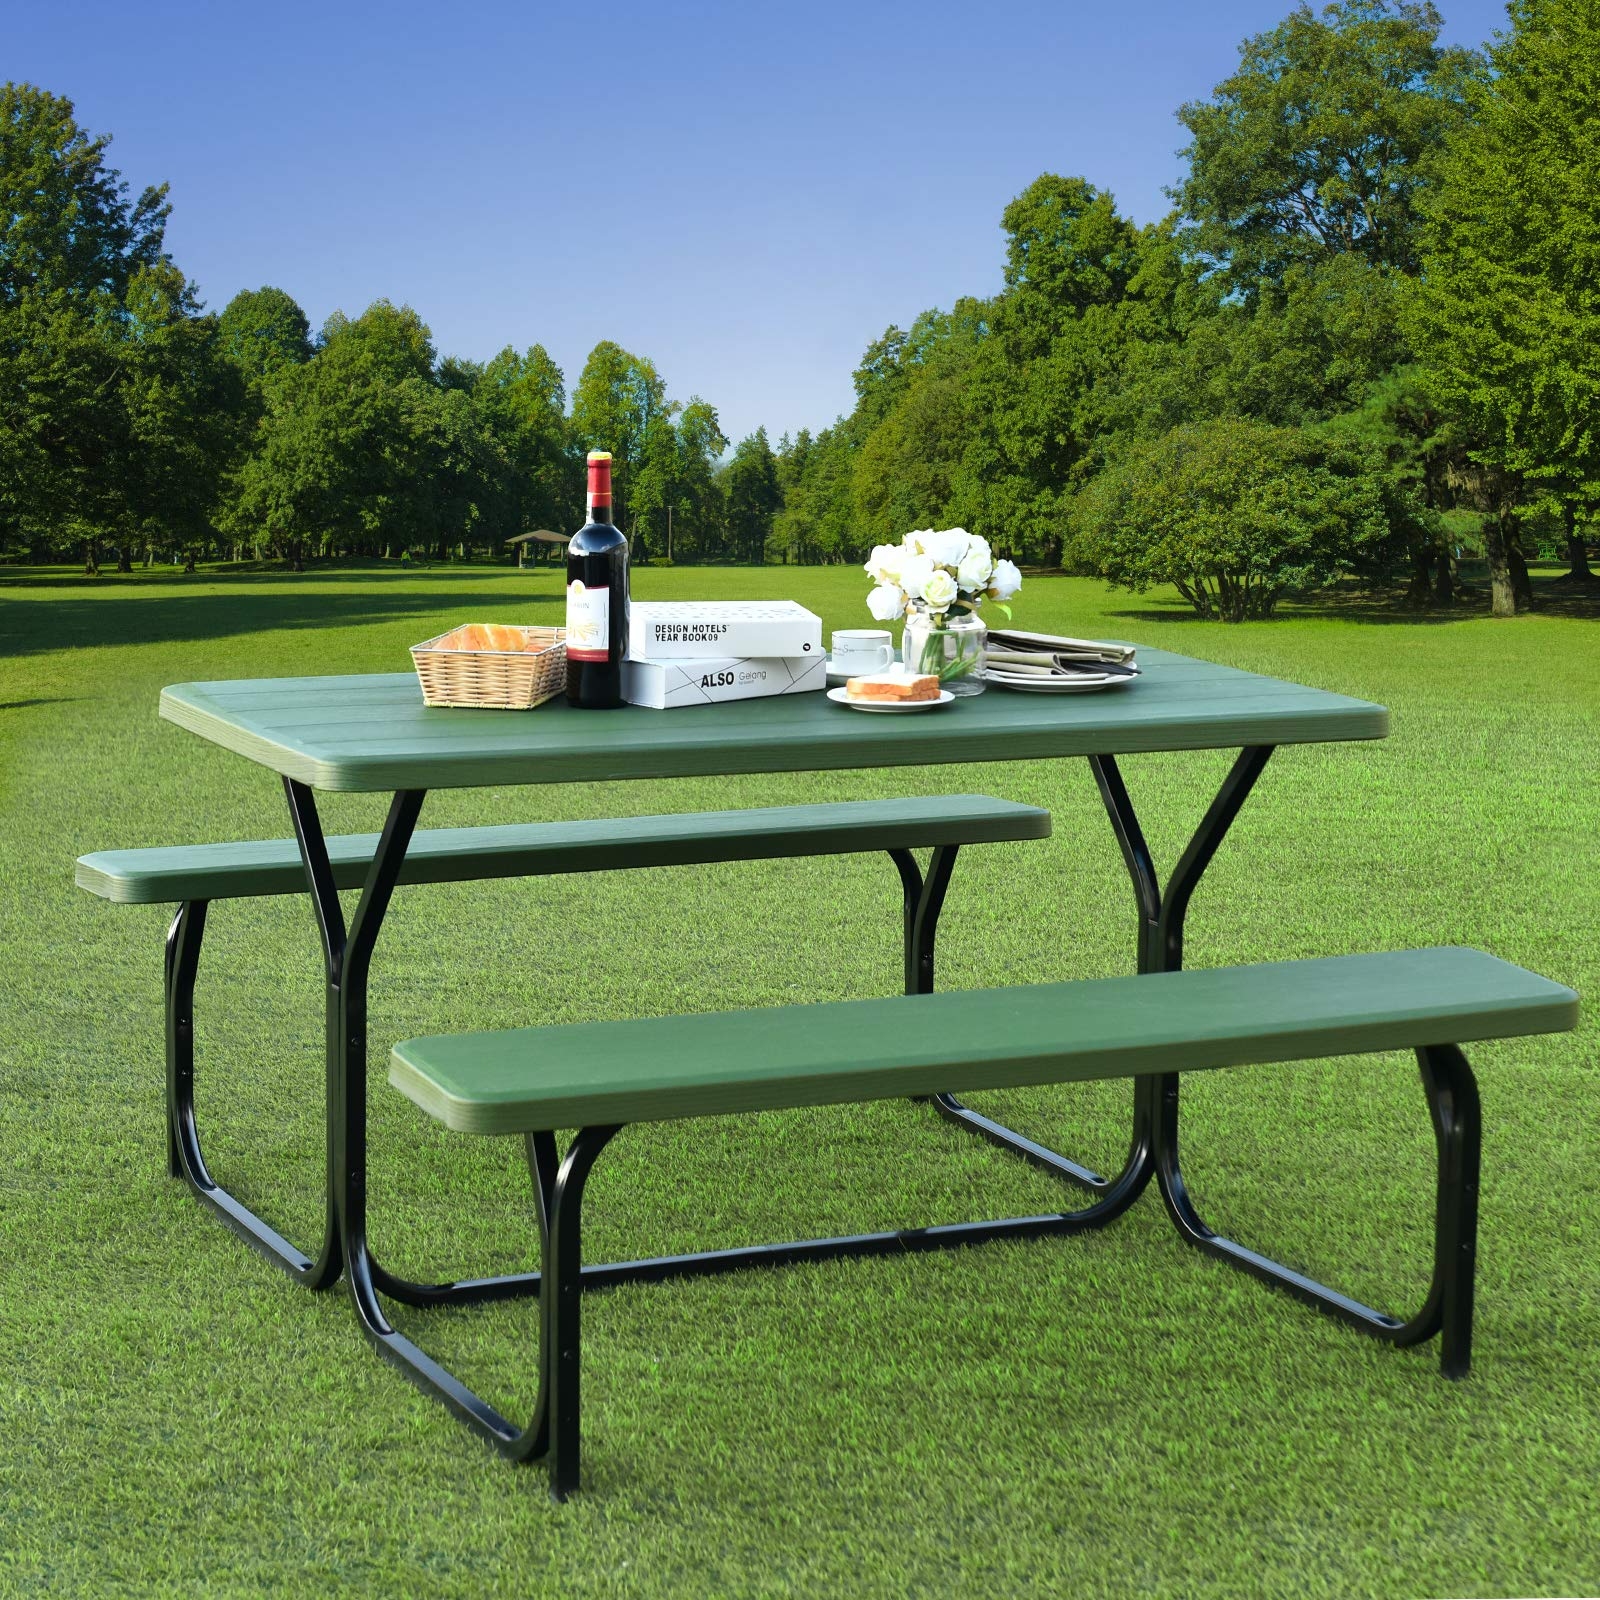 Giantex Picnic Table Bench Set for Outdoor Camping